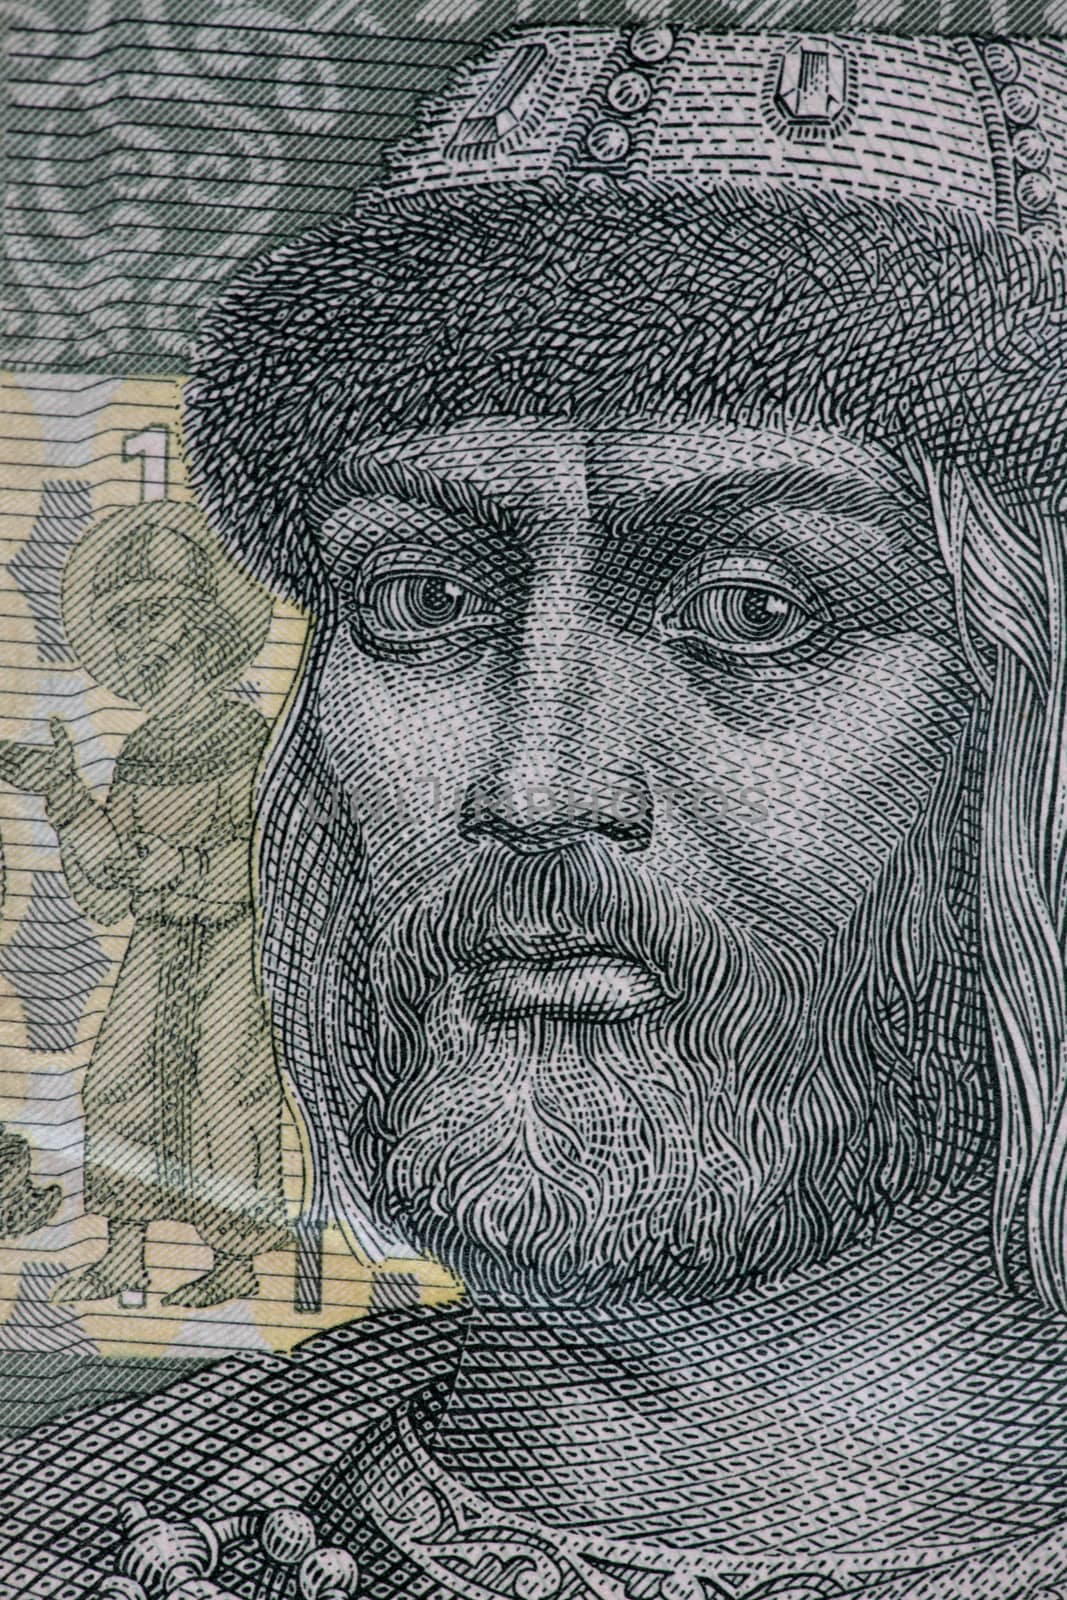 Prince Vladimir portrait on Ukrainian banknotes macro shot